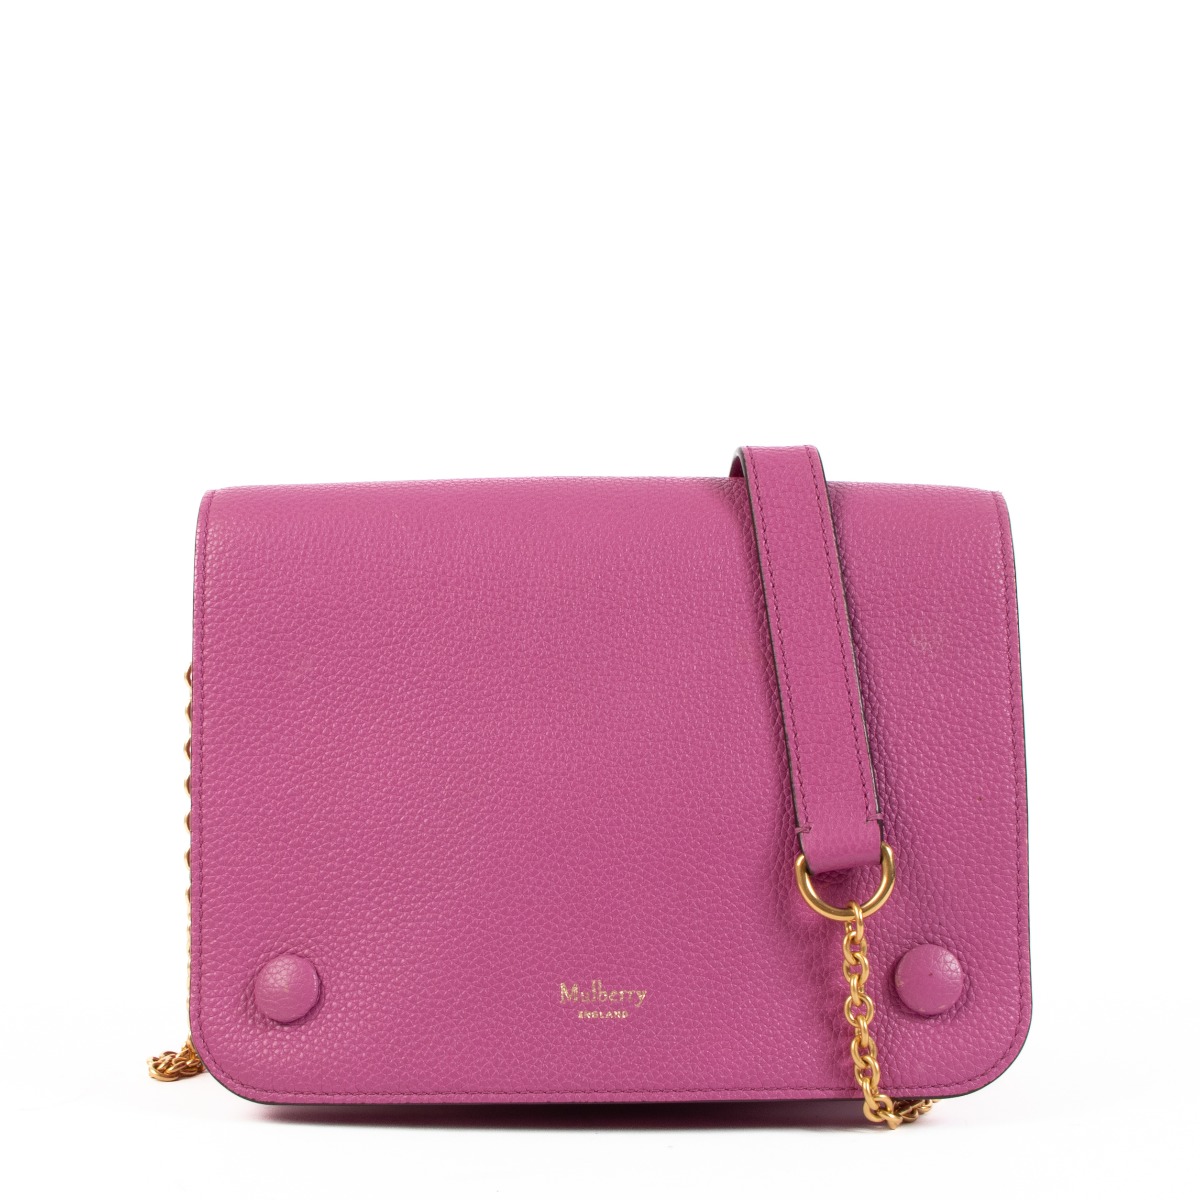 Mulberry Cecily | Handbag Clinic